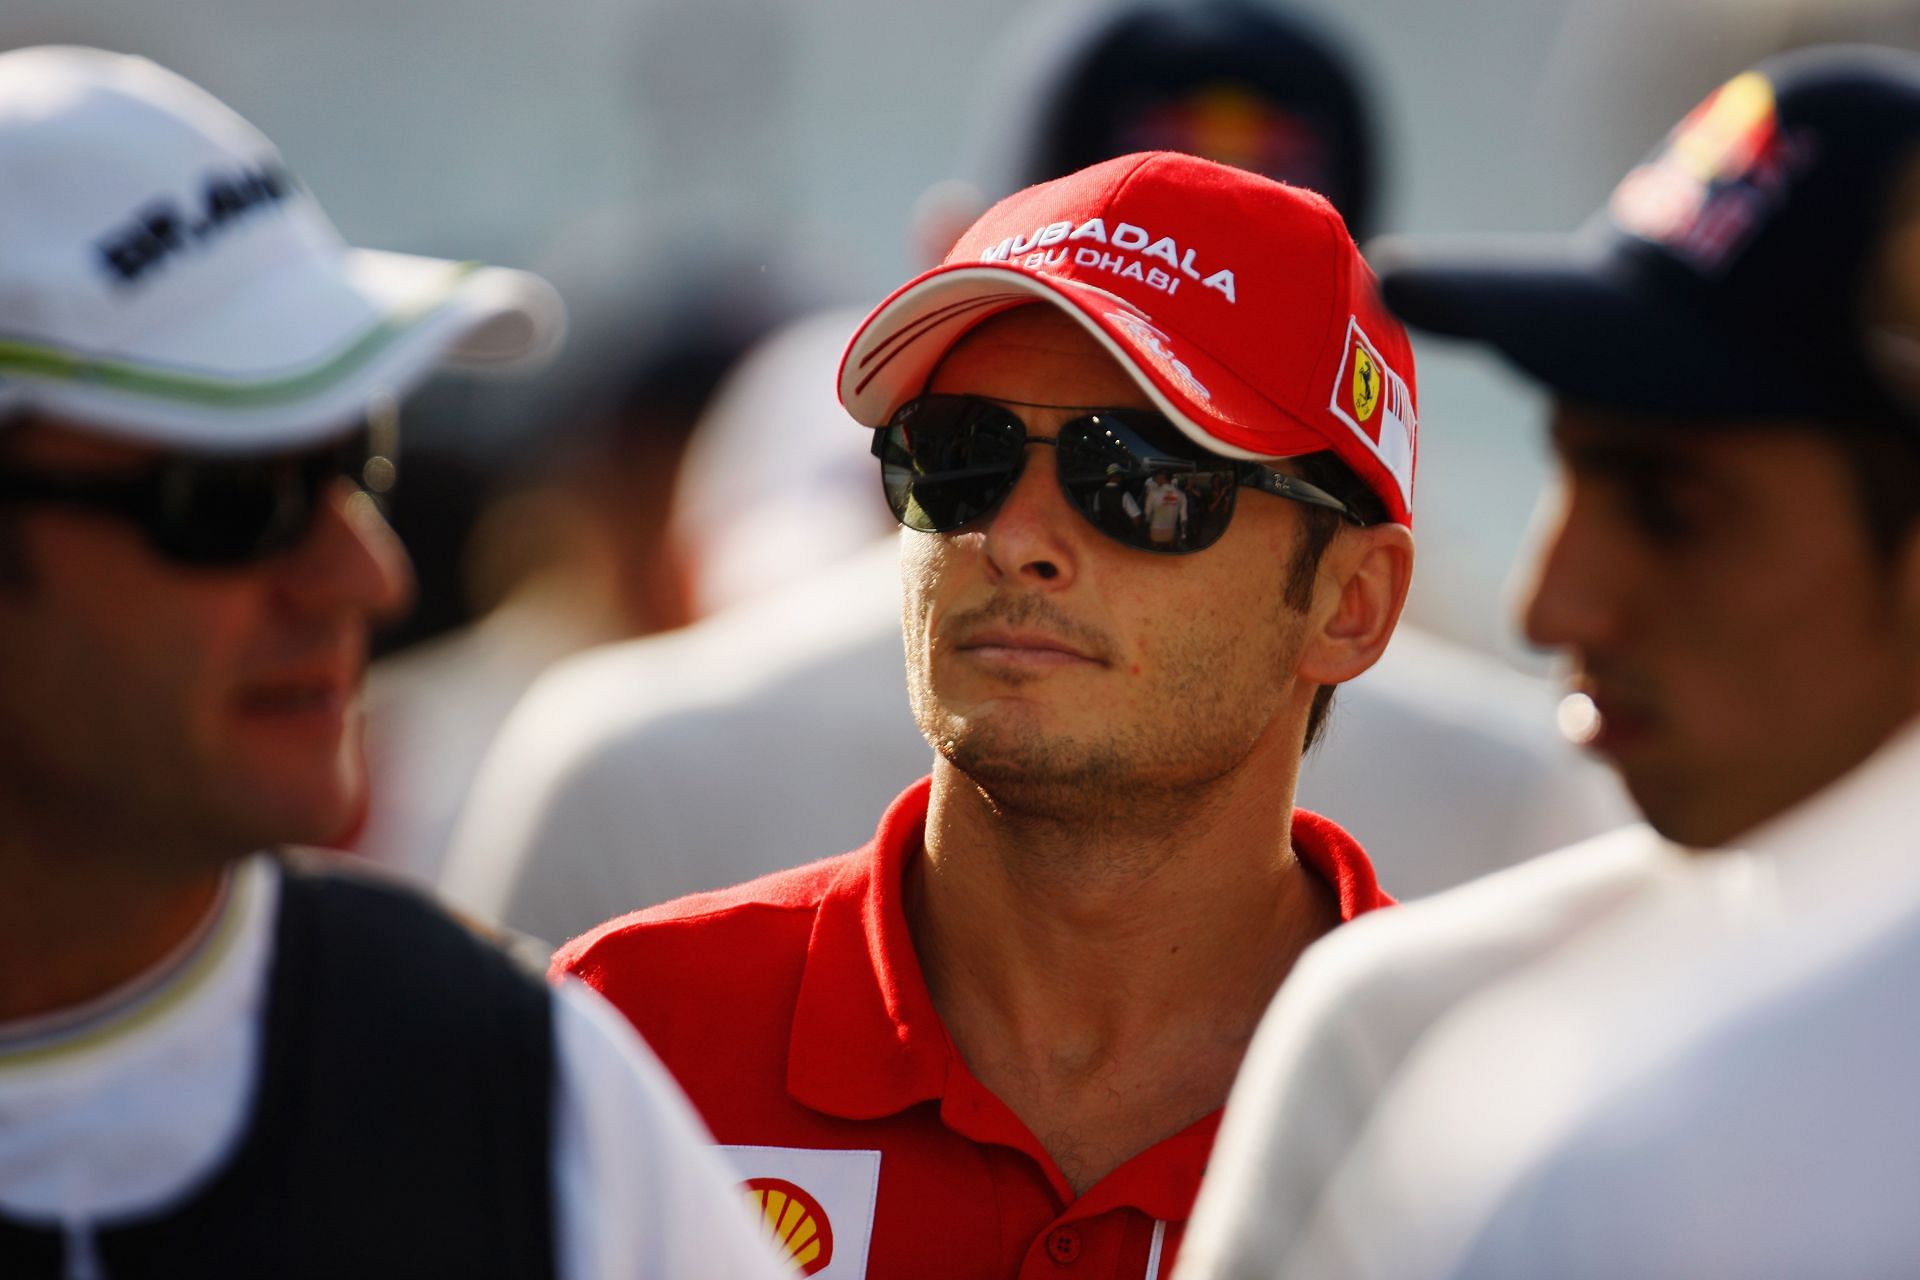 Giancarlo Fisichella achieved his childhood dream of driving for Ferrari in 2009